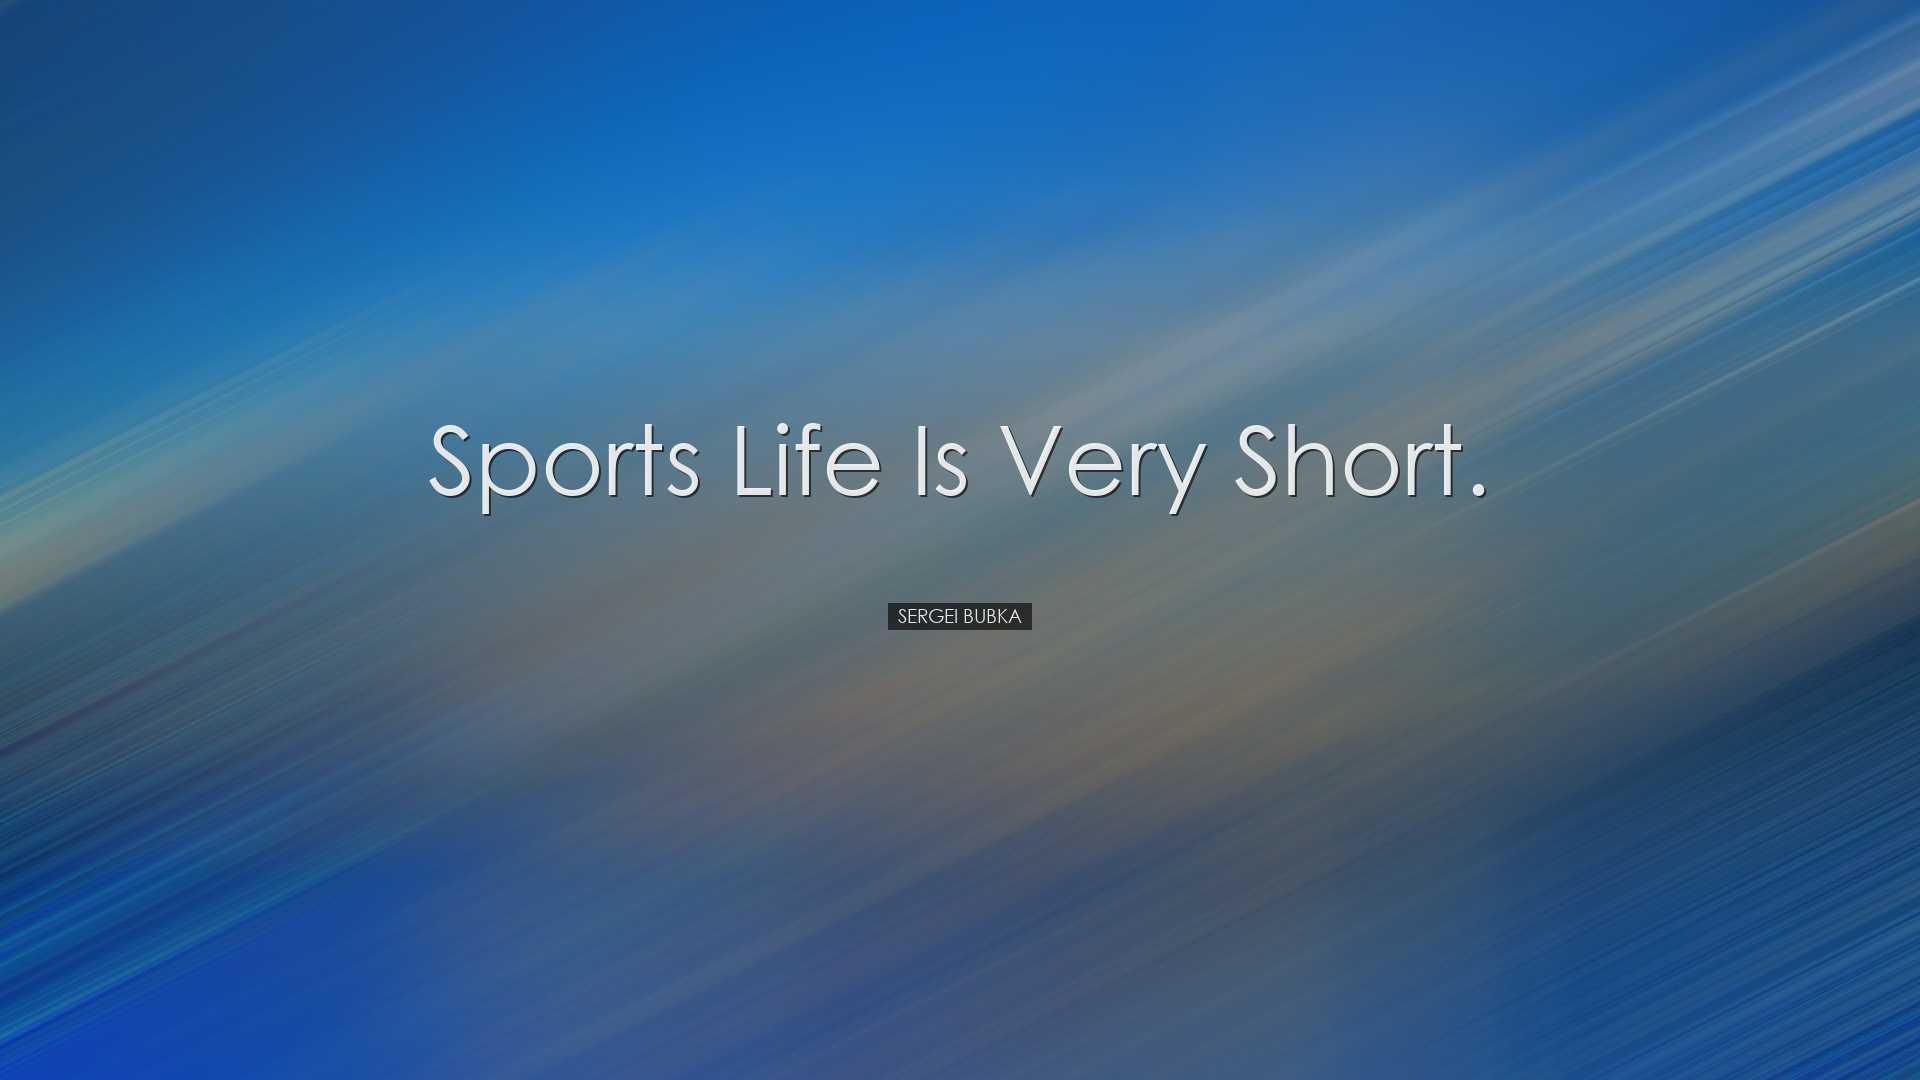 Sports life is very short. - Sergei Bubka